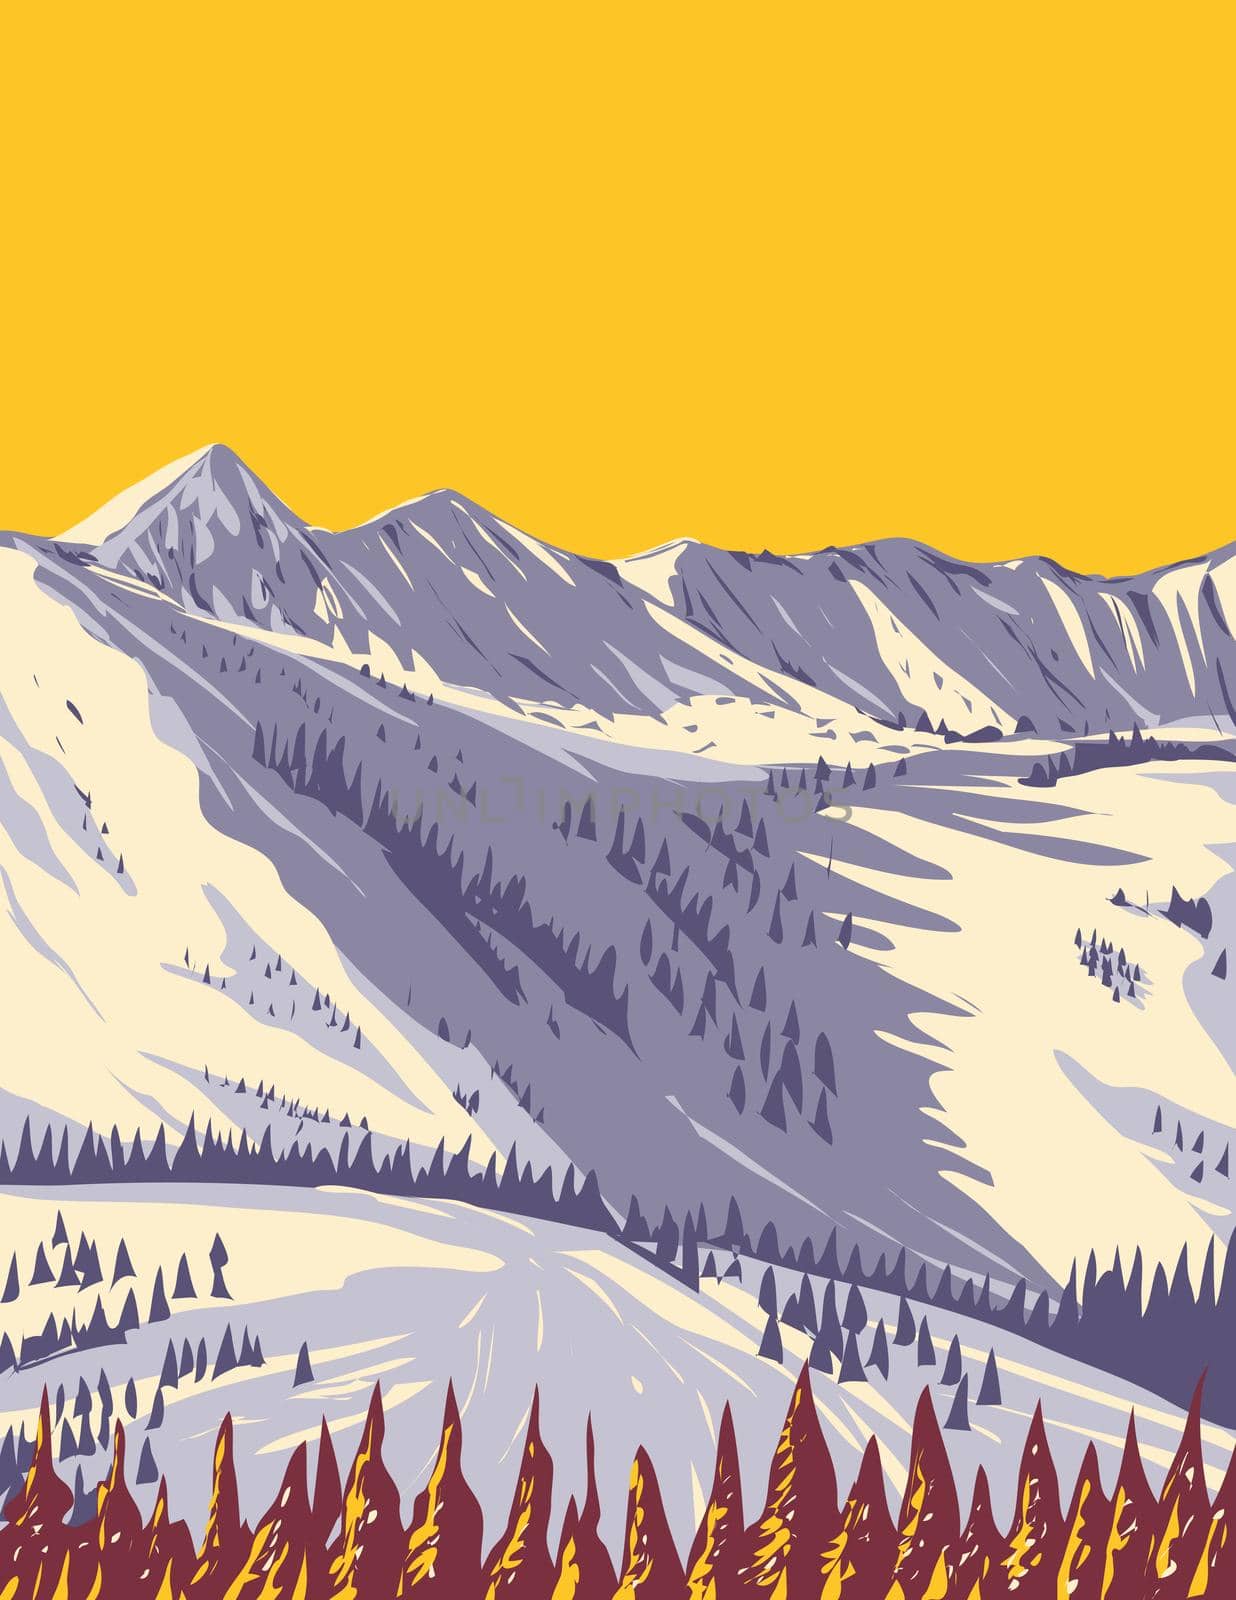 Snowbird Ski and Summer Resort at Hidden Peak near Salt Lake City Utah WPA Poster Art by patrimonio